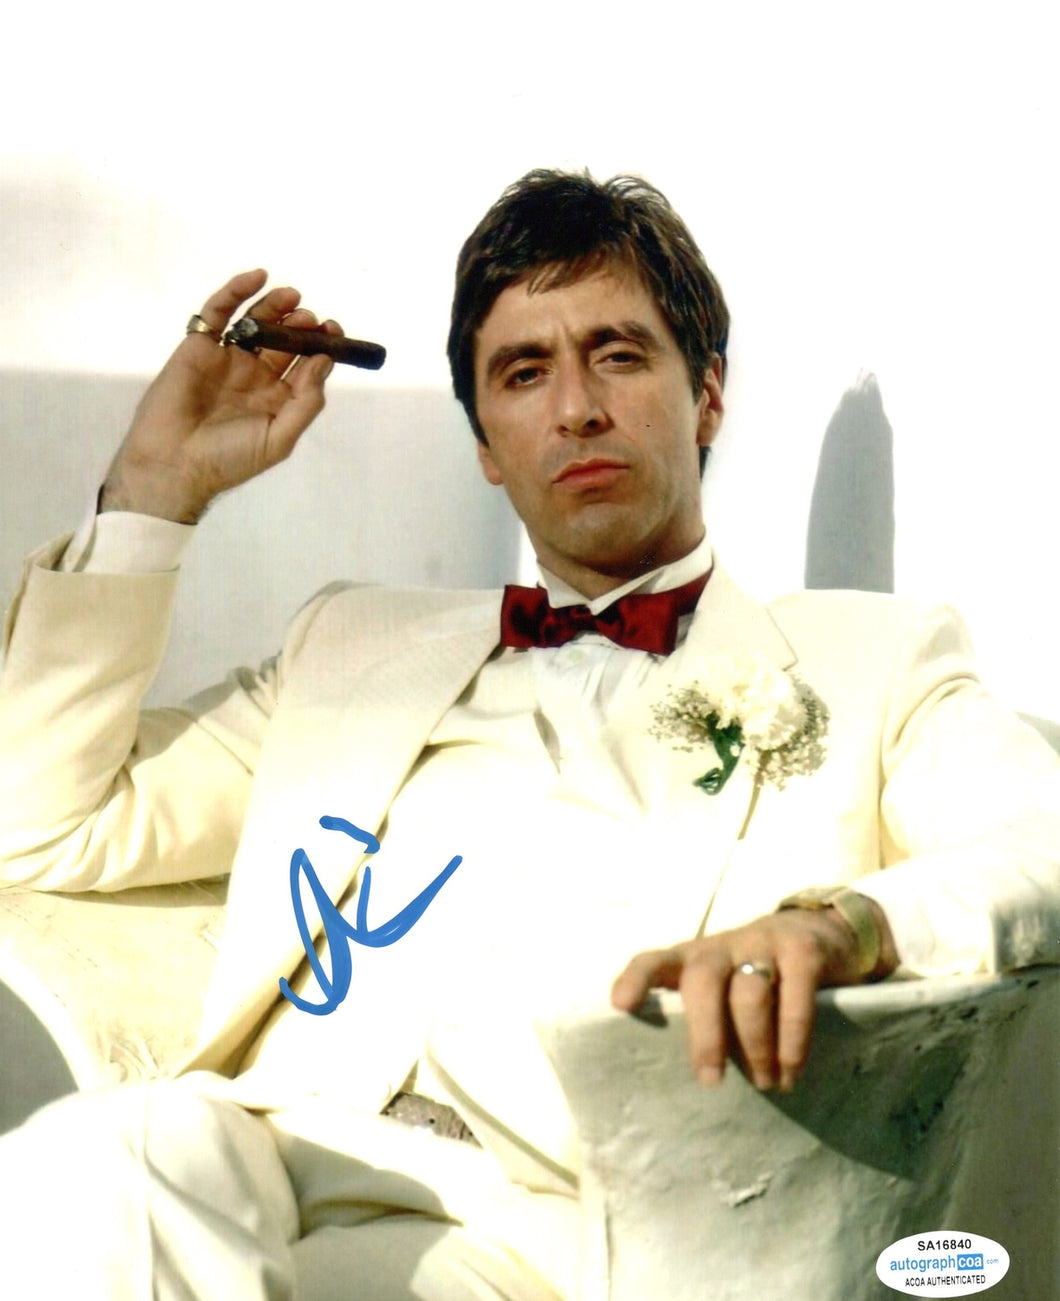 Al Pacino Autographed Signed 8x10 Smoking Cigar Photo